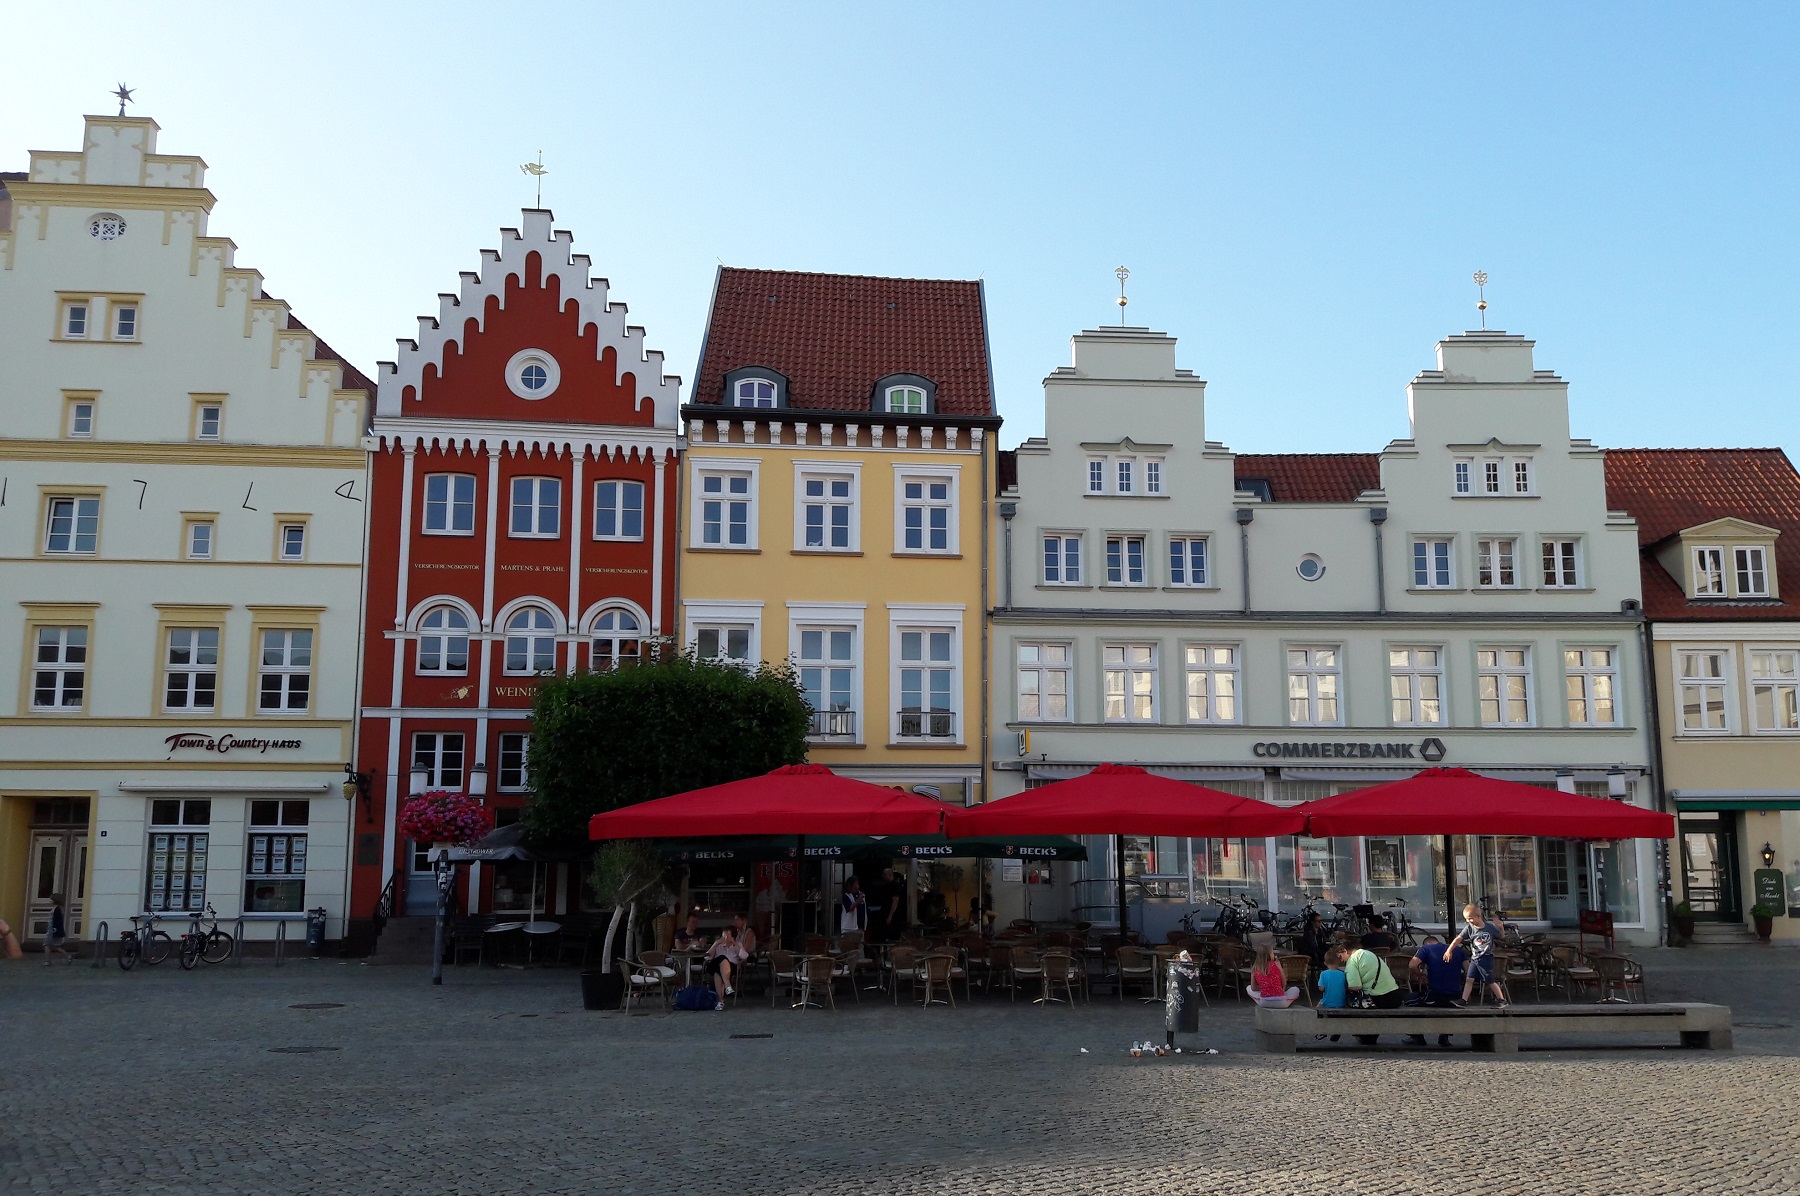 Market Square, Greifswald